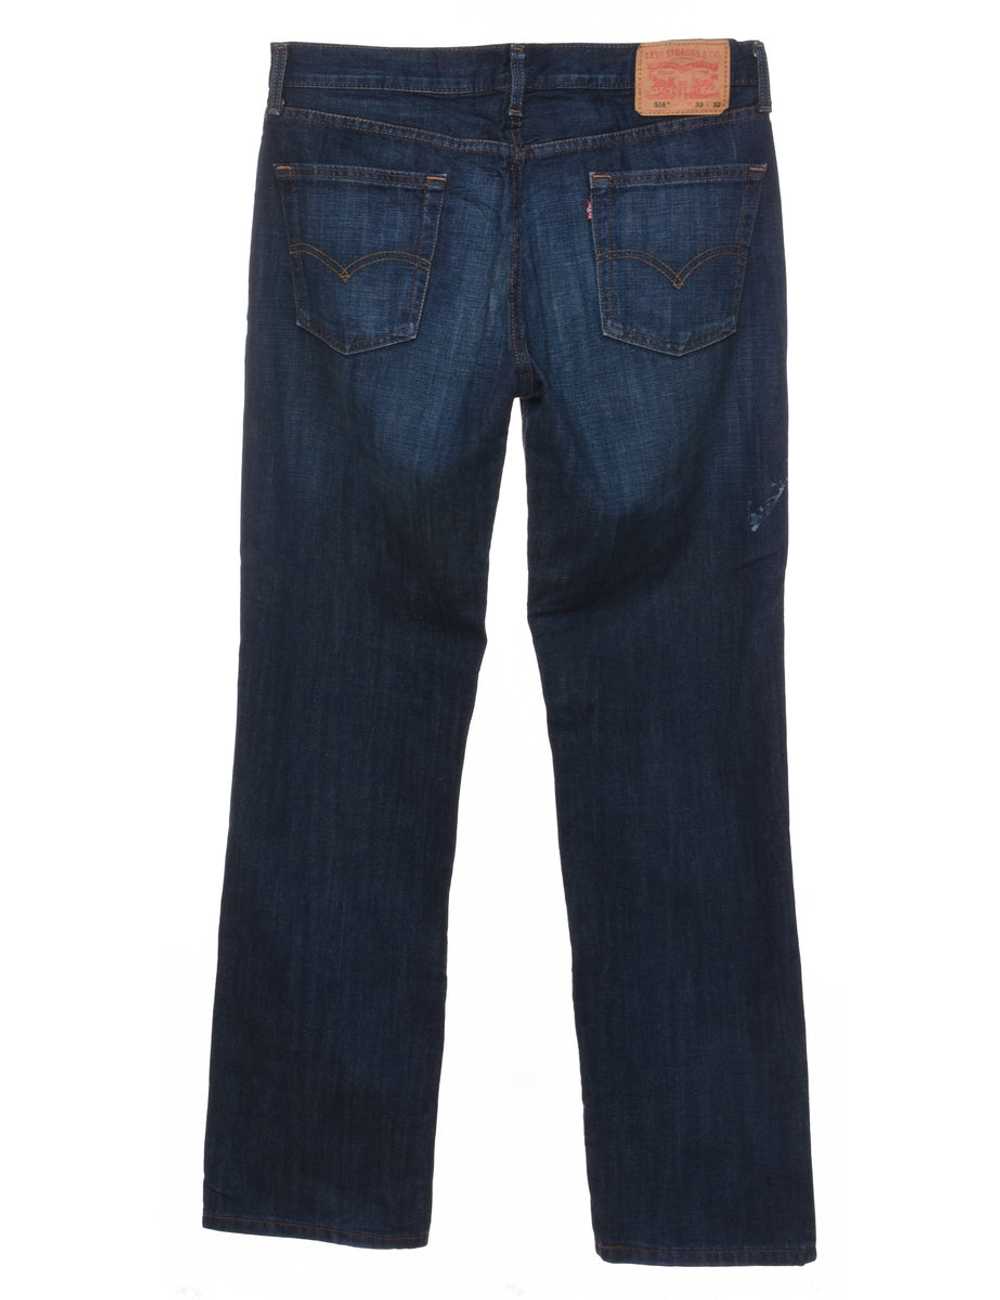 514's Fit Levi's Dark Wash Jeans - W34 L32 - image 2